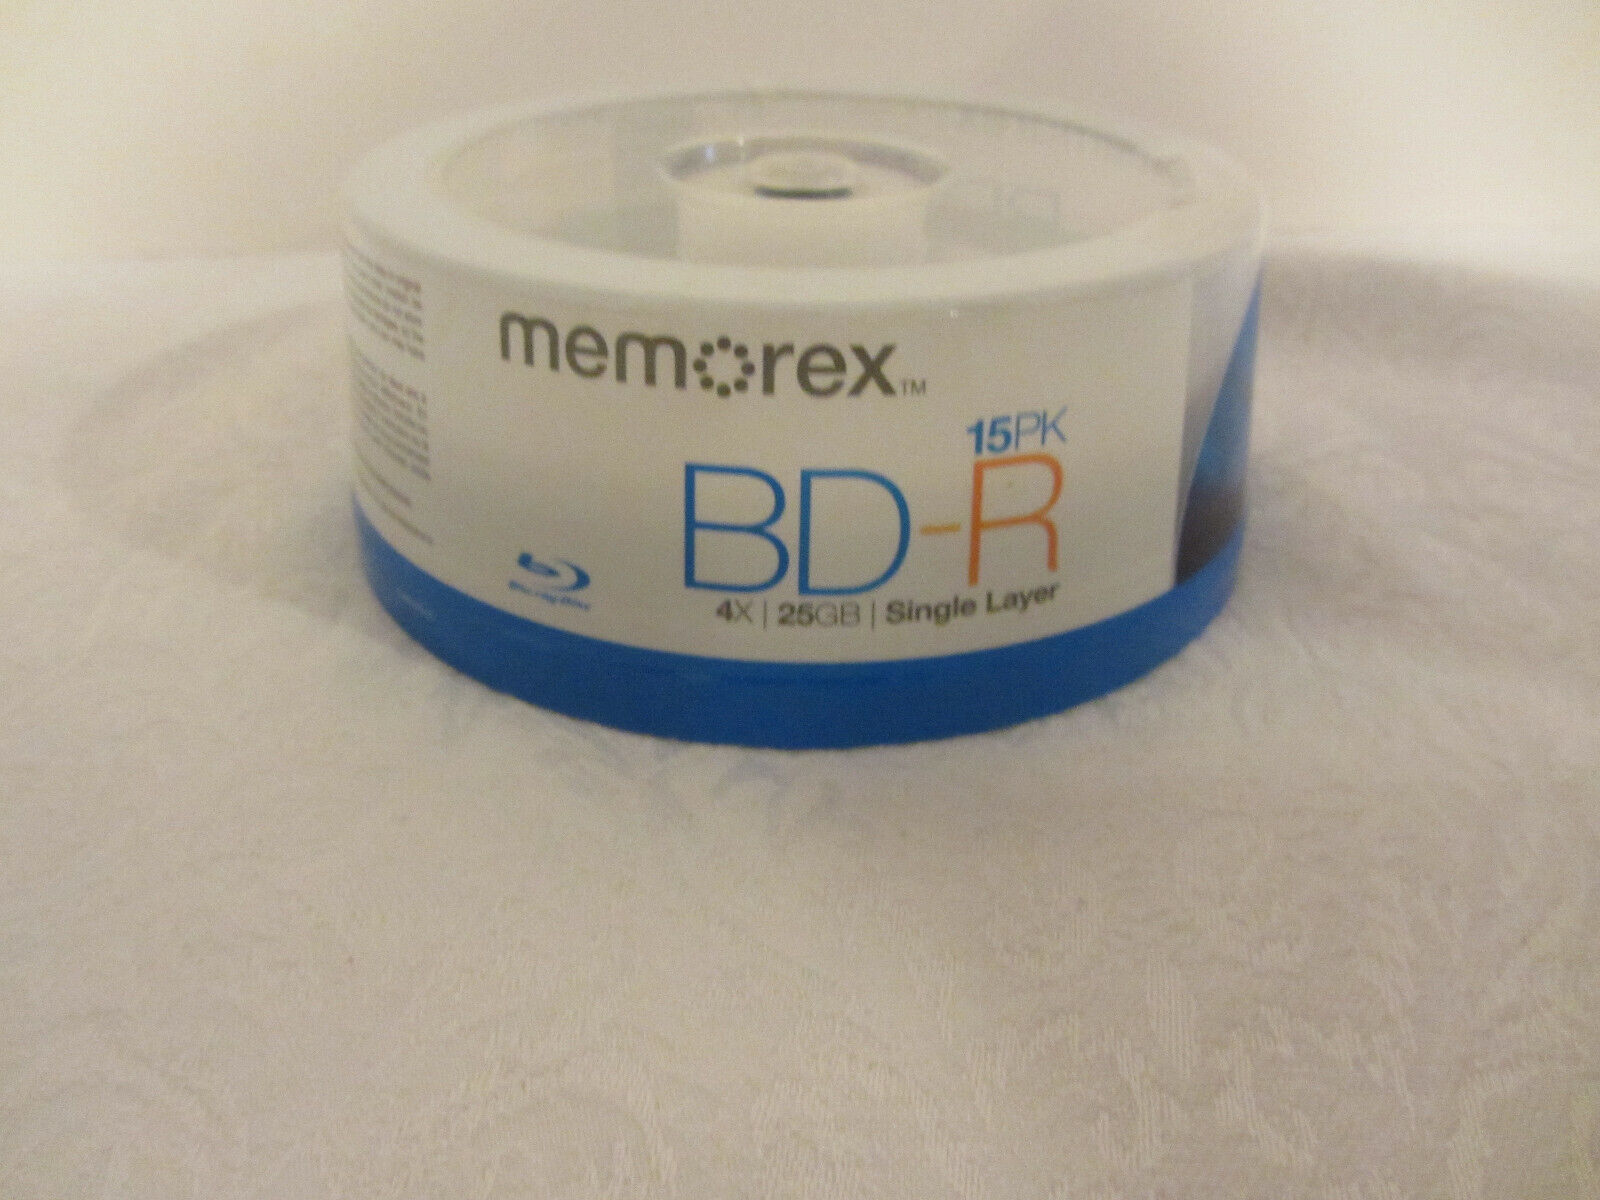 Memorex Blu-Ray BD-R 4x 25GB  (15 Pack) Single Layer Disks NEW SEALED